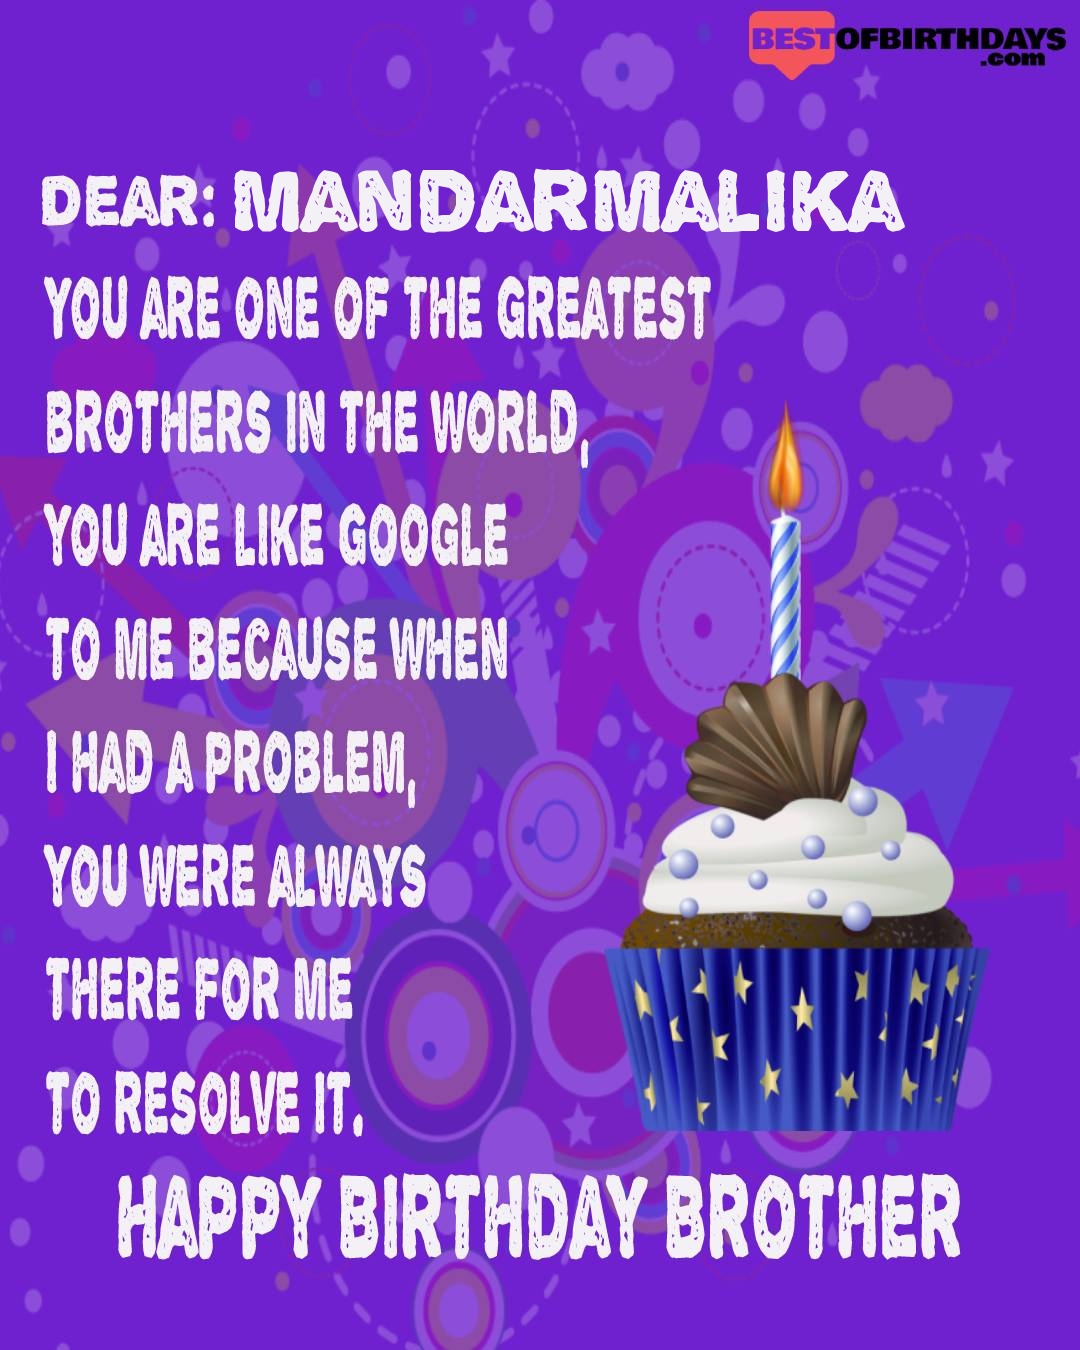 Happy birthday mandarmalika bhai brother bro